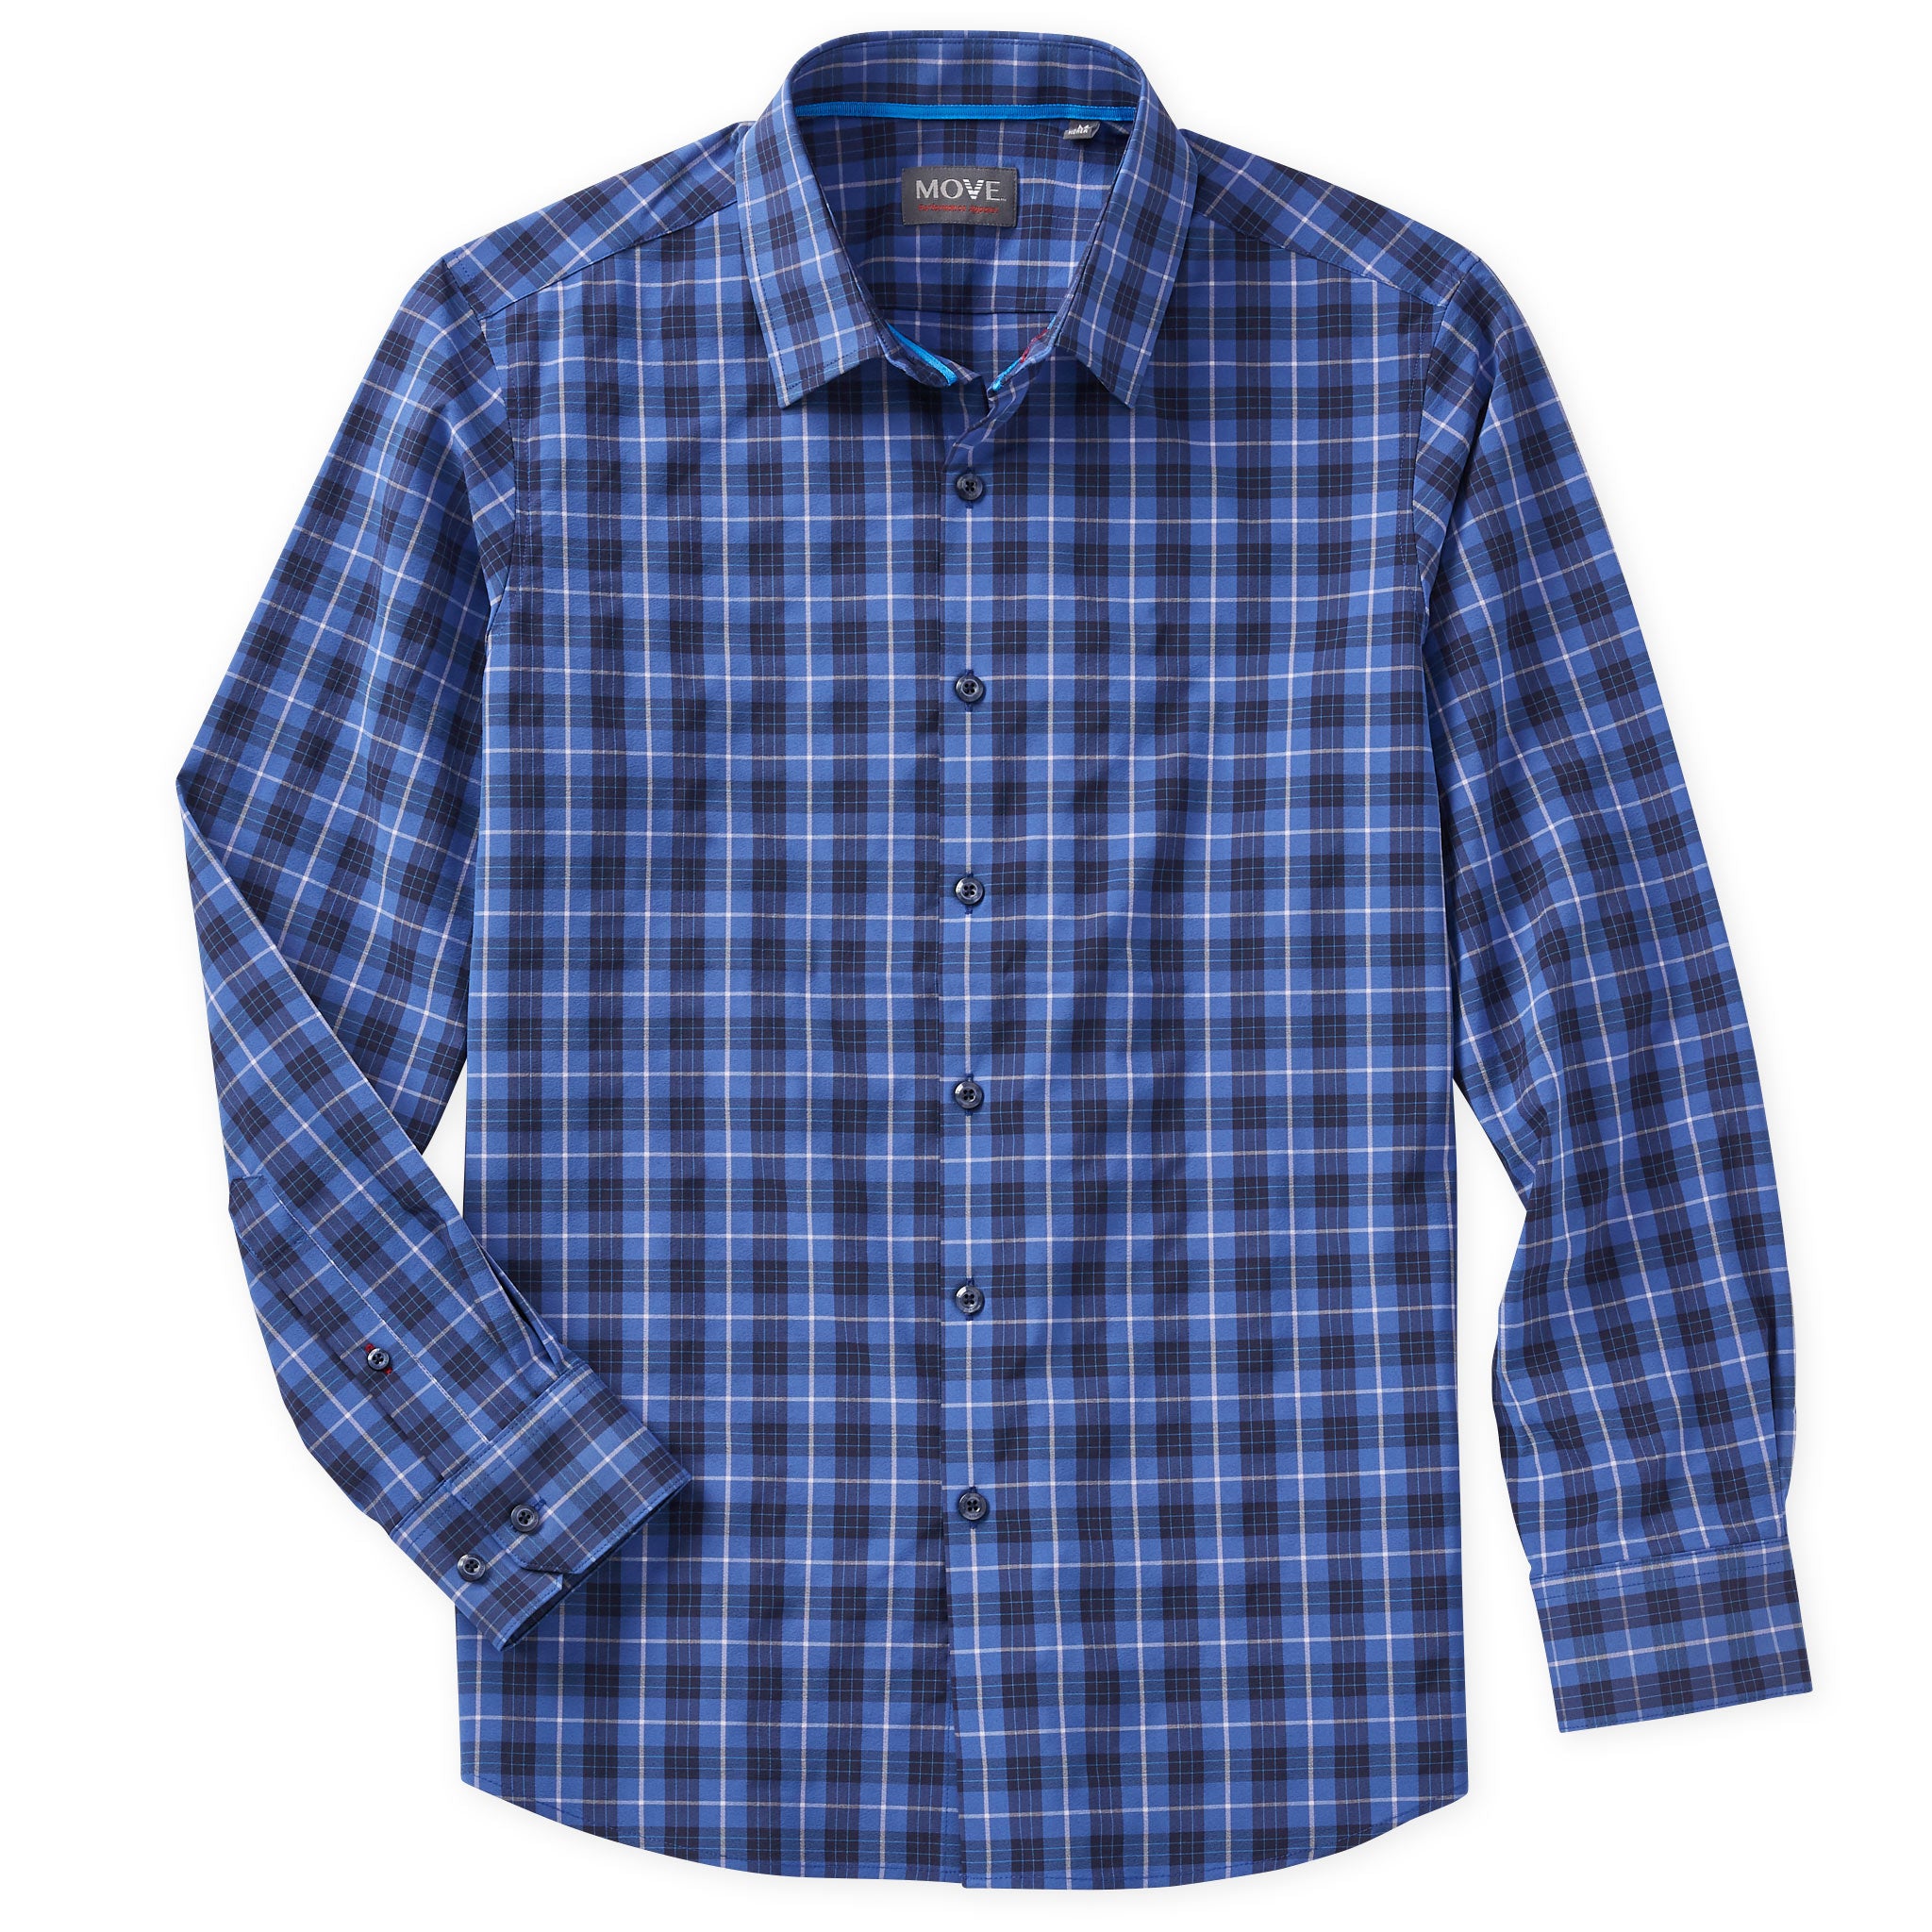 Move Performance Apparel Belmont Men's Long Sleeve Blue Plaid Shirt Blue / Medium